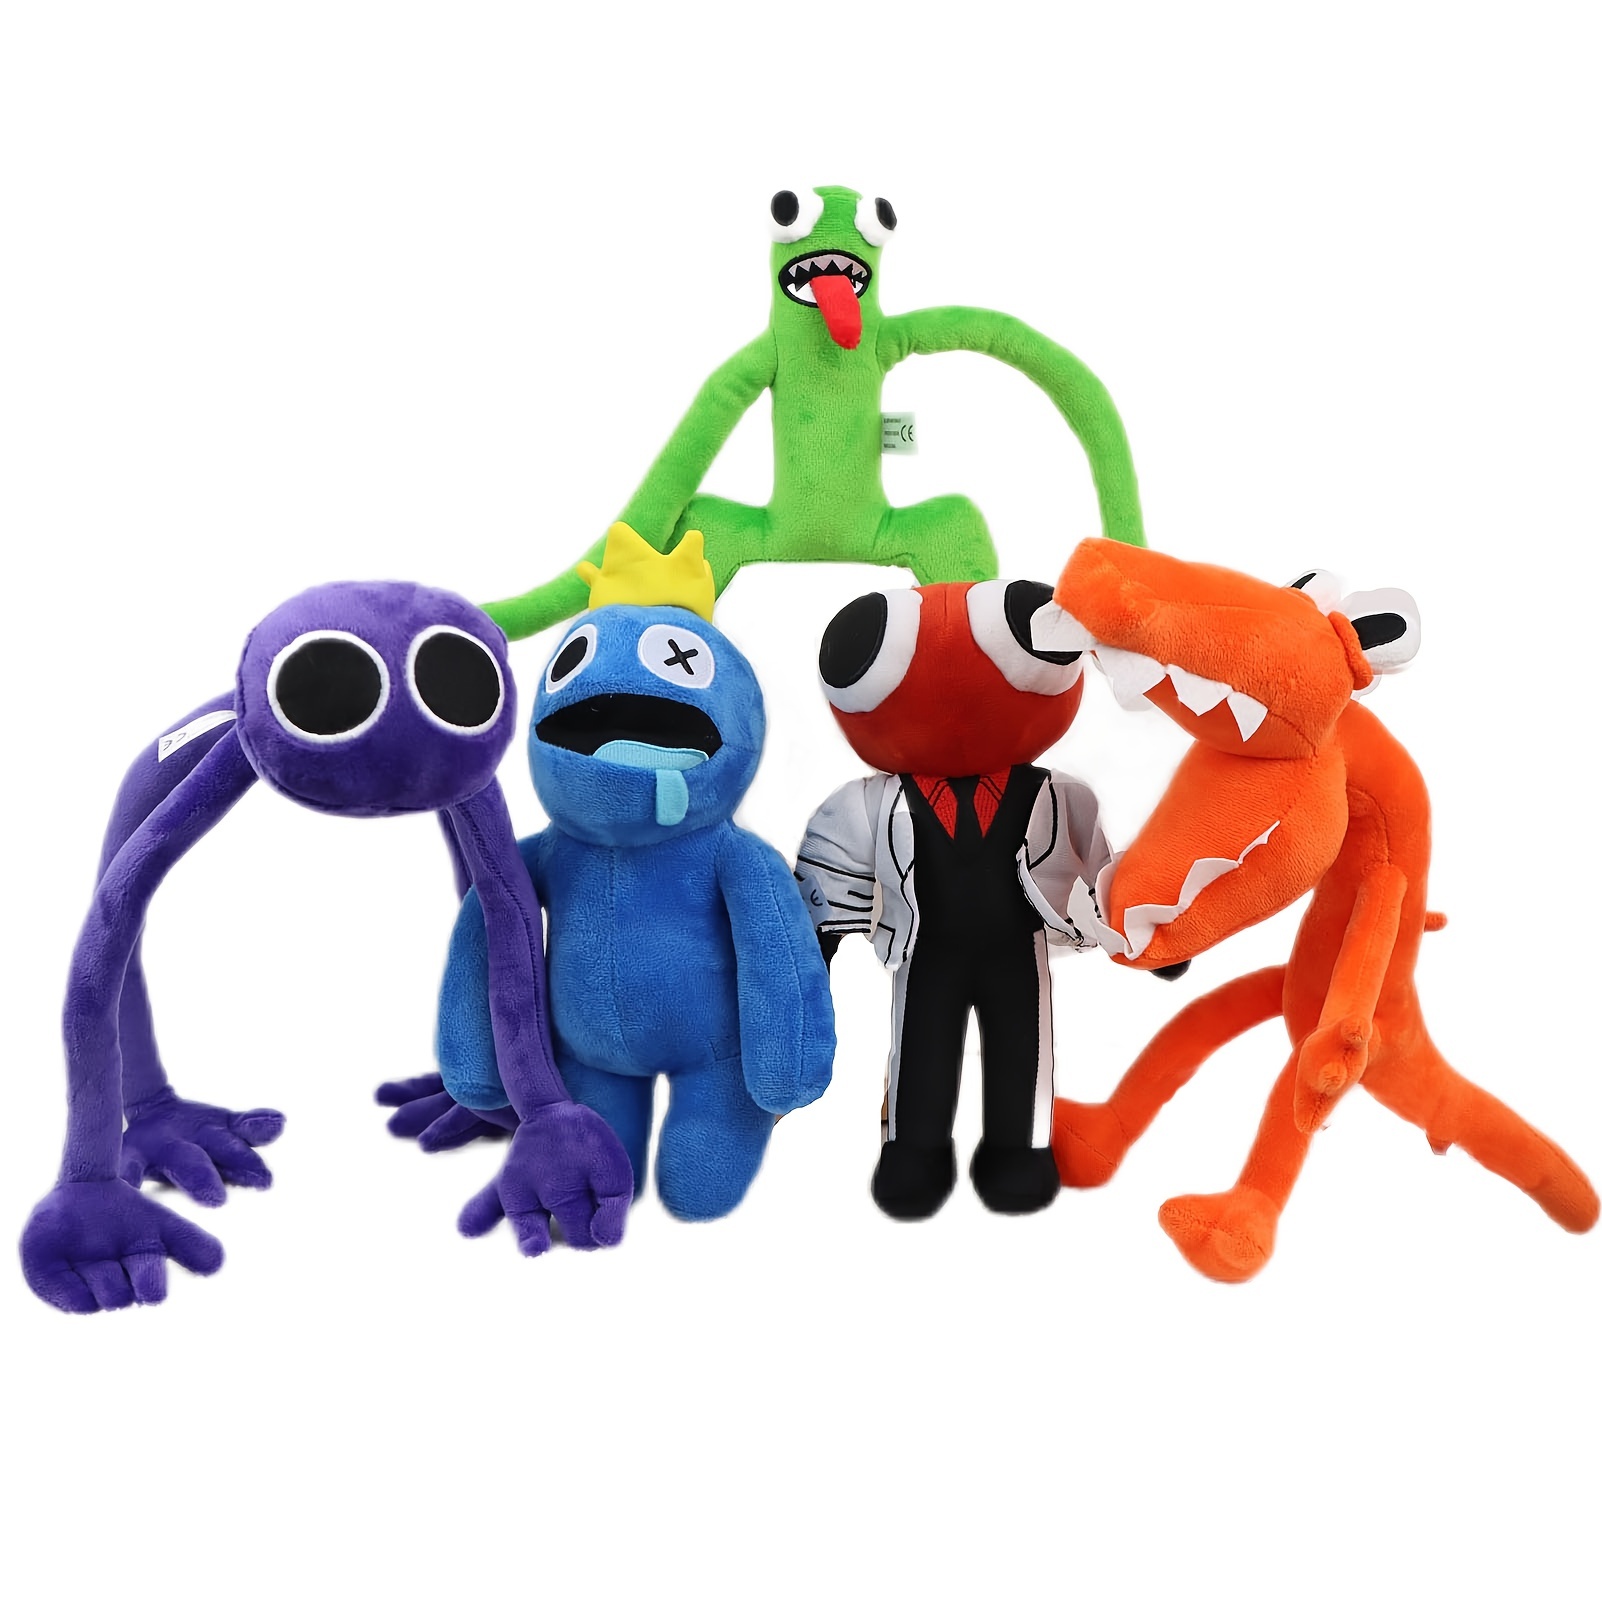 2022 New 20cm Roblox Rainbow Friends Plush Toy Cartoon Game